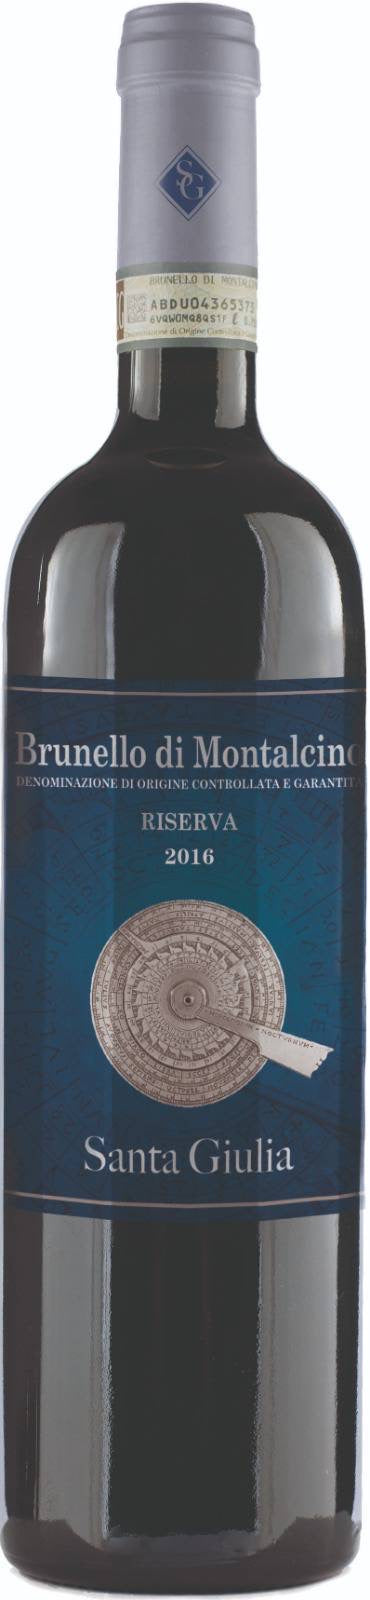 Brunello di Montalcino Riserva 2017 New!/ ブルネッロ ディ モンタルチーノ リゼルバ